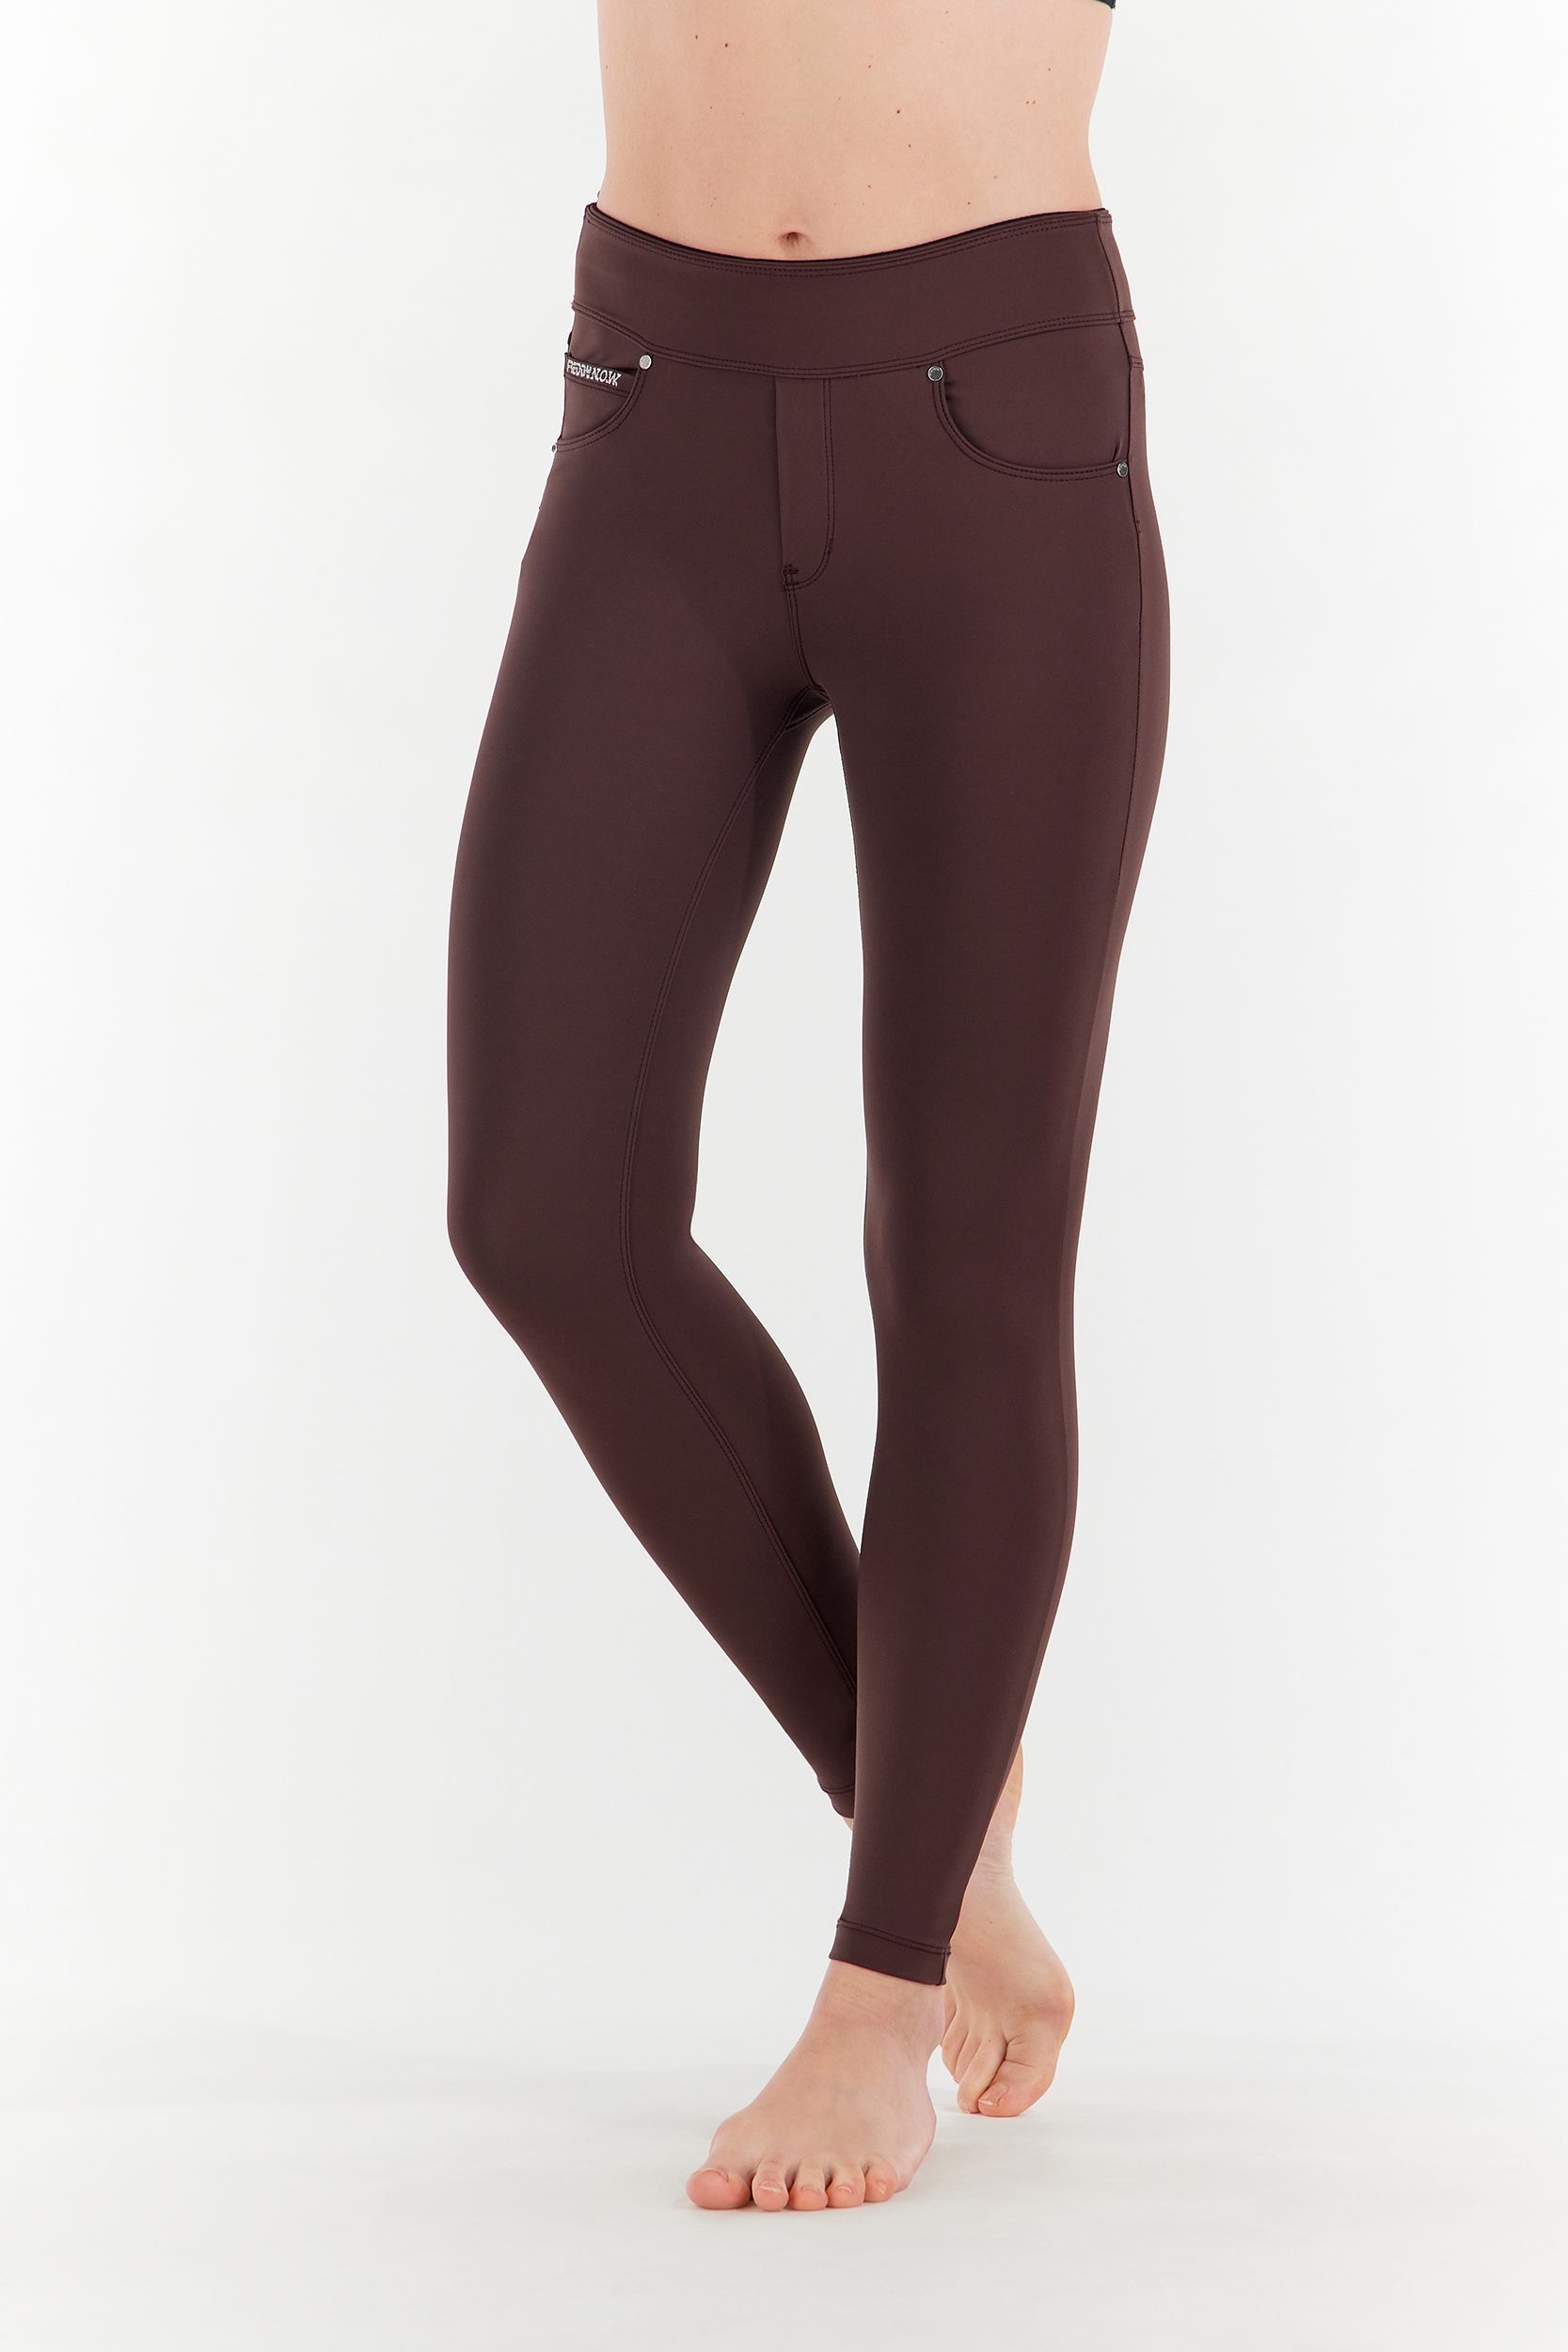 N.O.W.® Pants Yoga aus atmungsaktivem bioaktivem Gewebe | Freddy Official  Store